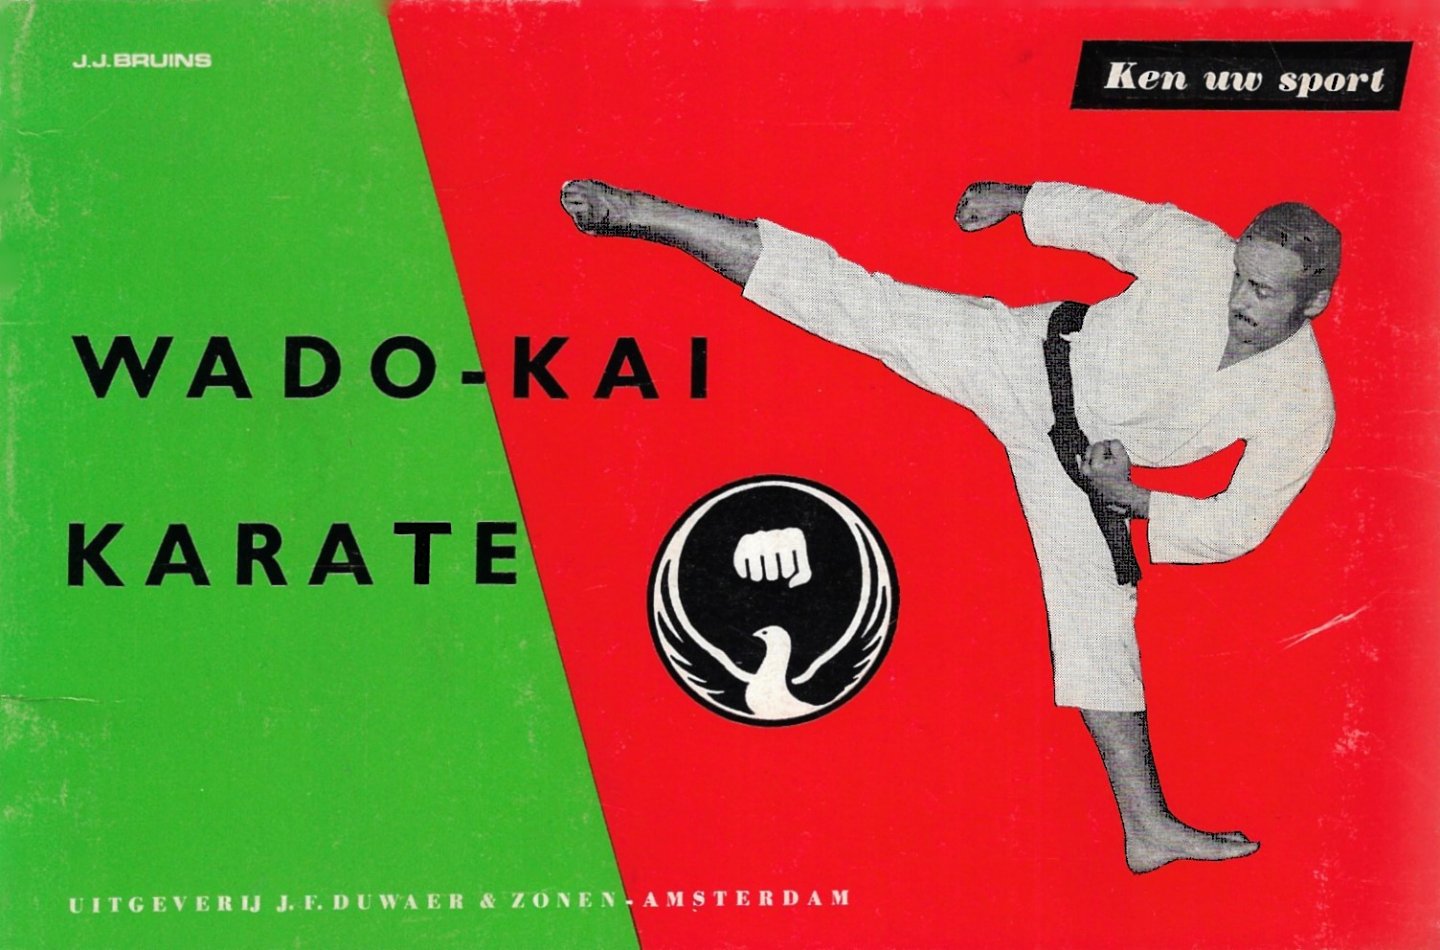 Bruins, J.J. - Ken uw sport - Wado-kai karate